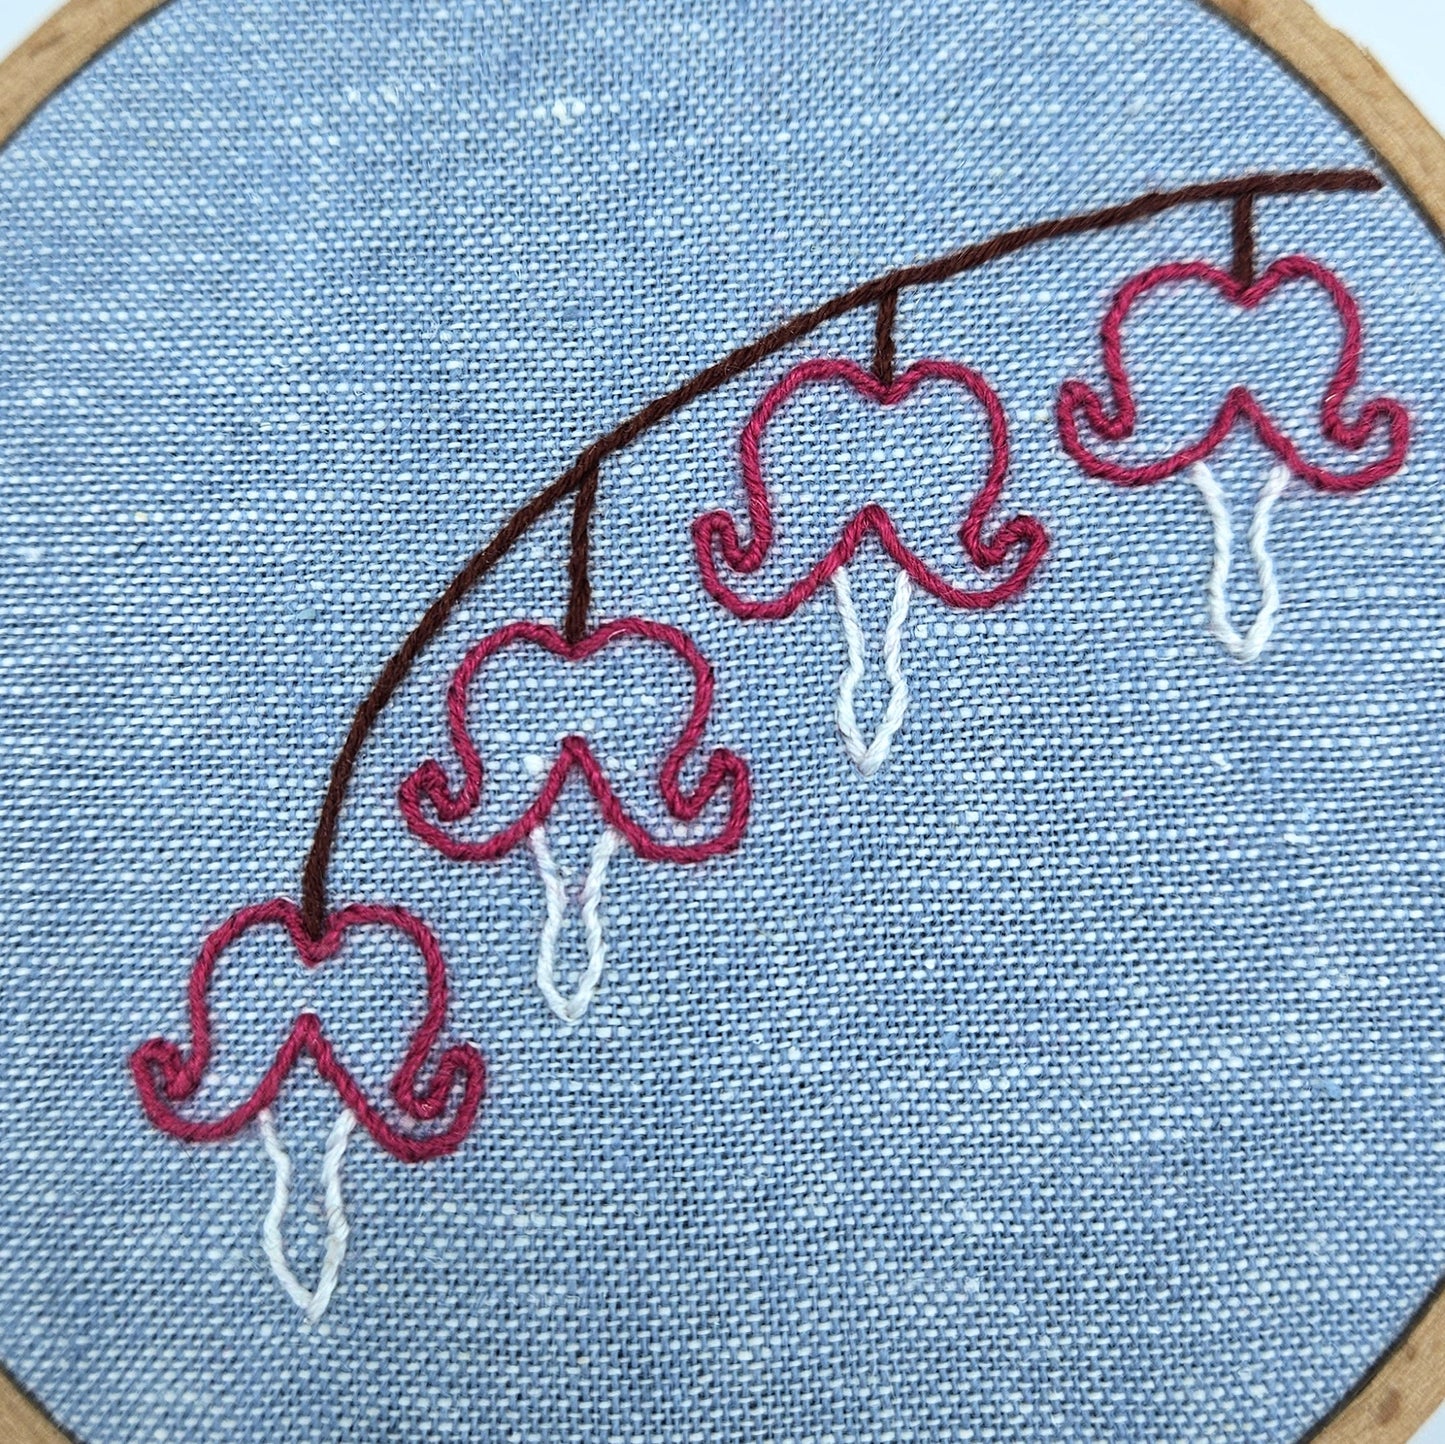 Bleeding Hearts Flower Embroidery Hoop Art